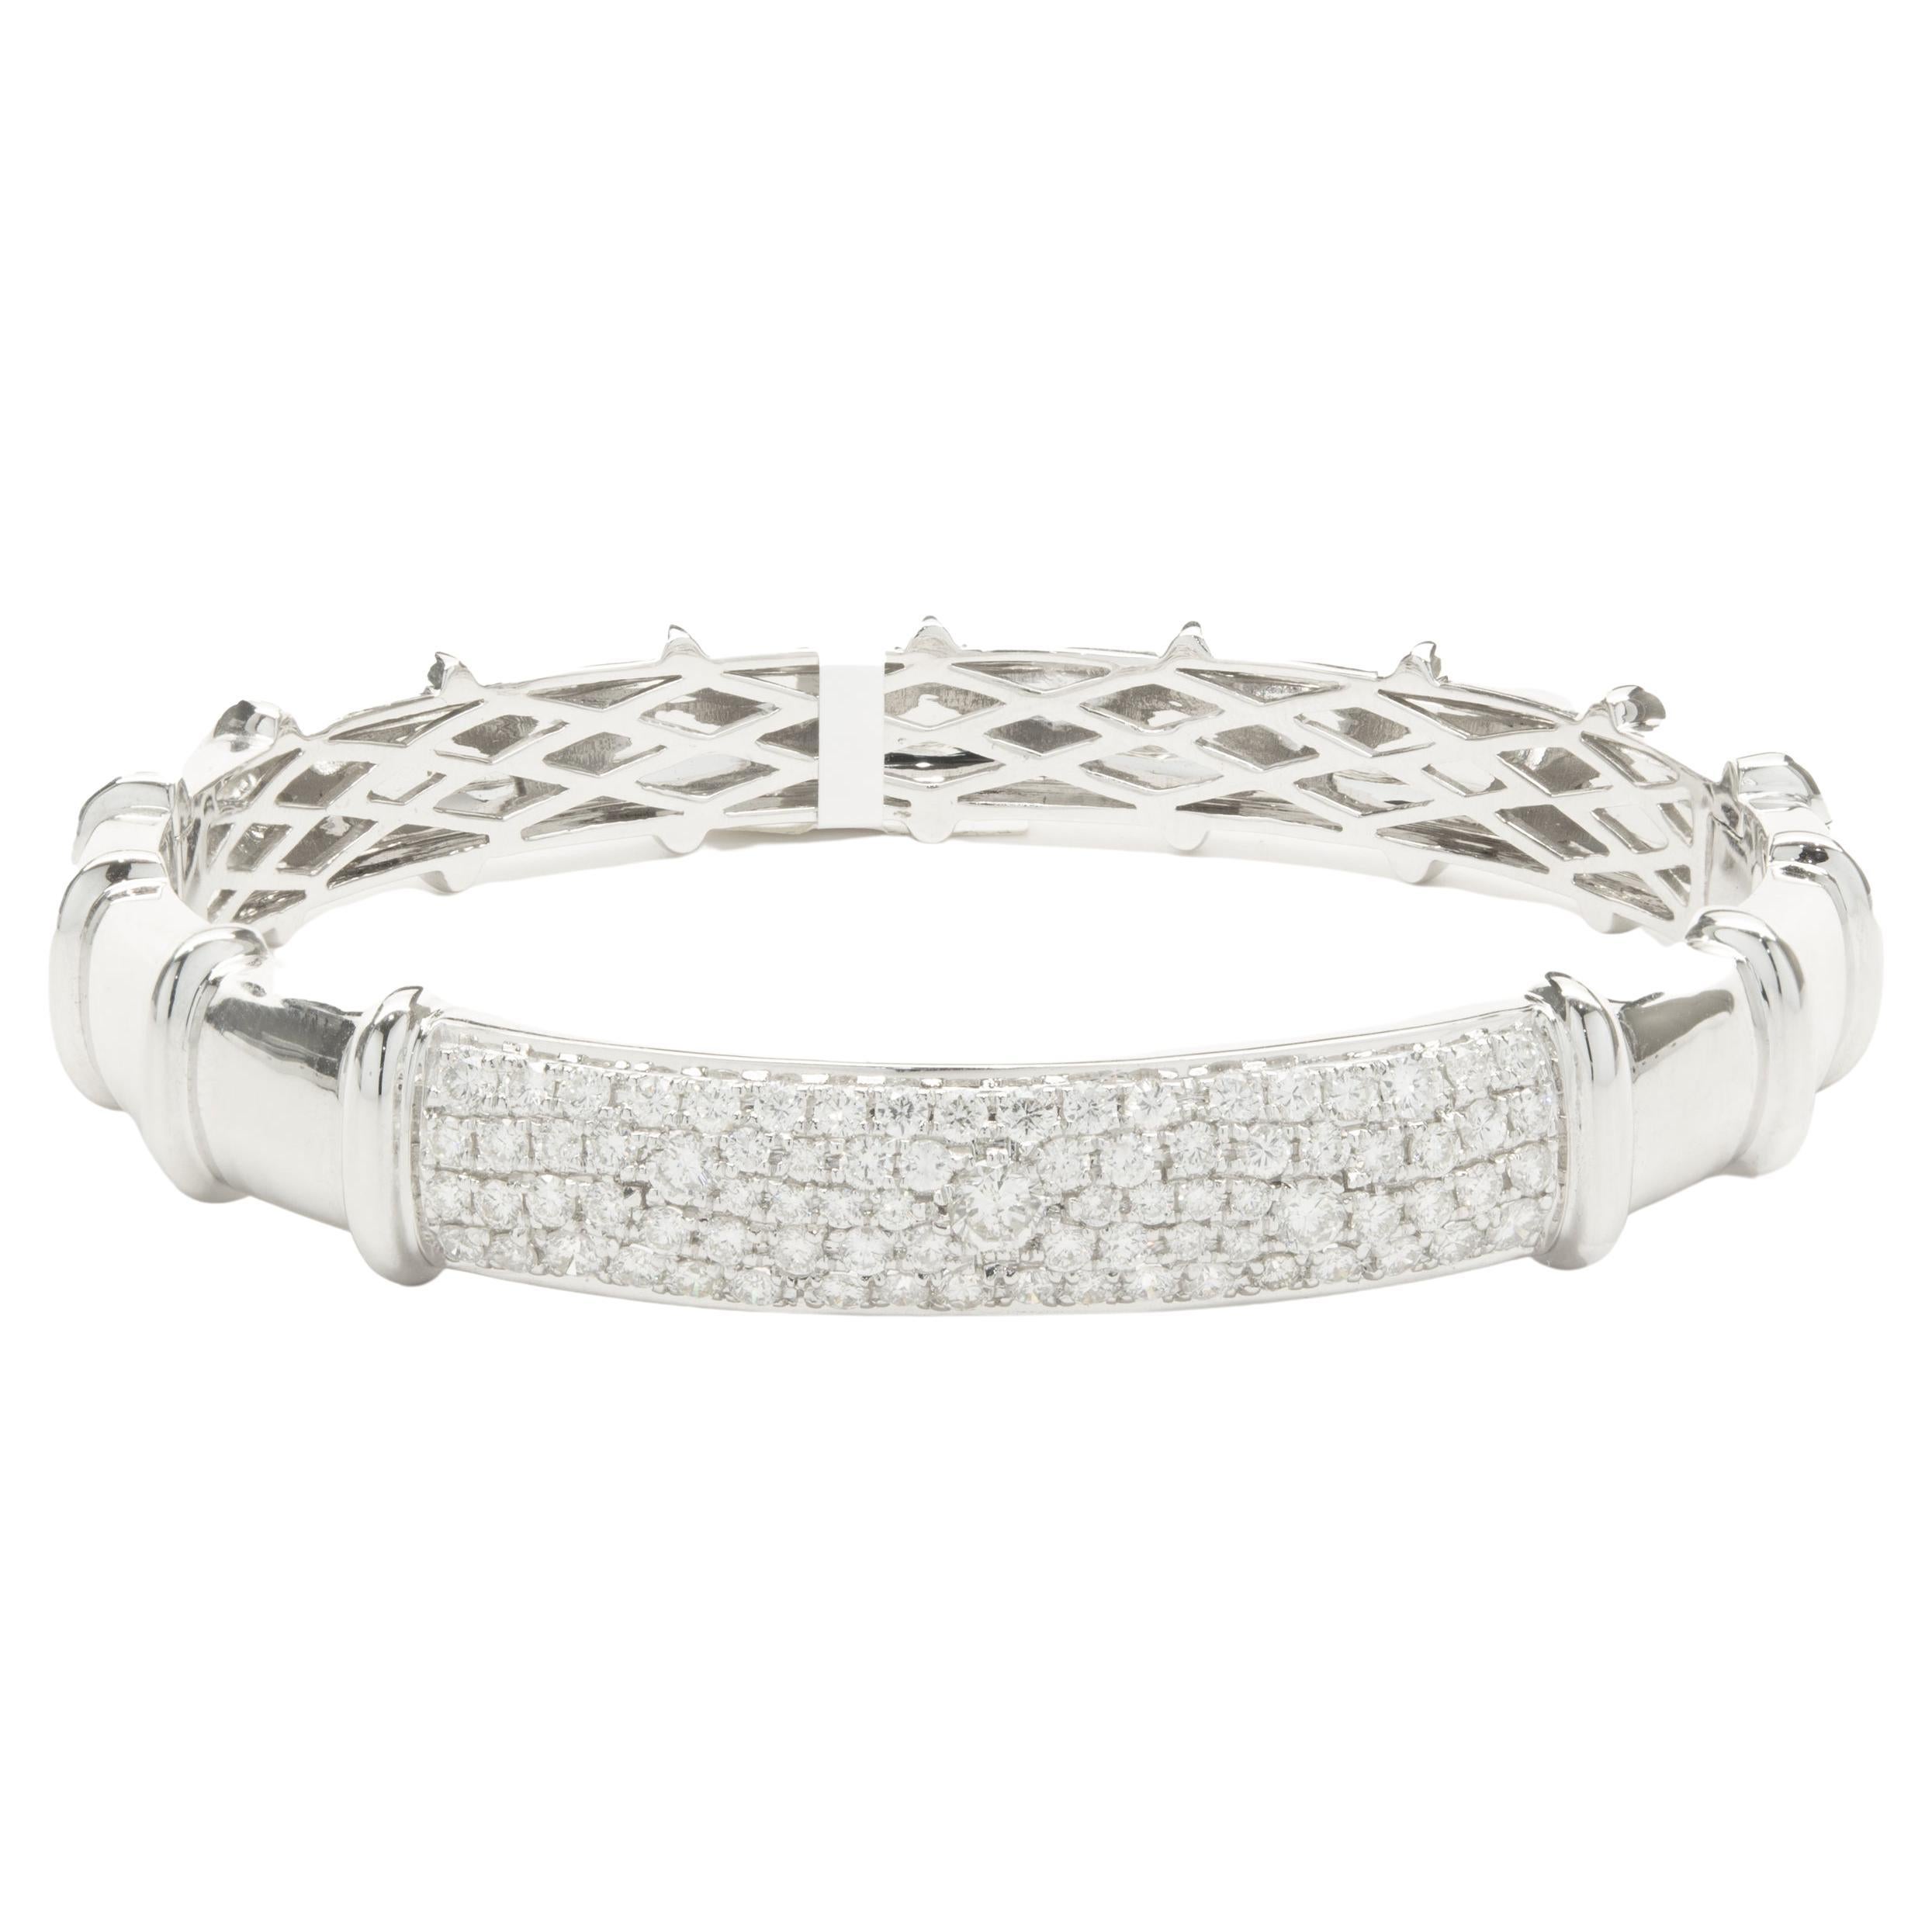 18 Karat White Gold Pave Diamond ID Style Bangle Bracelet